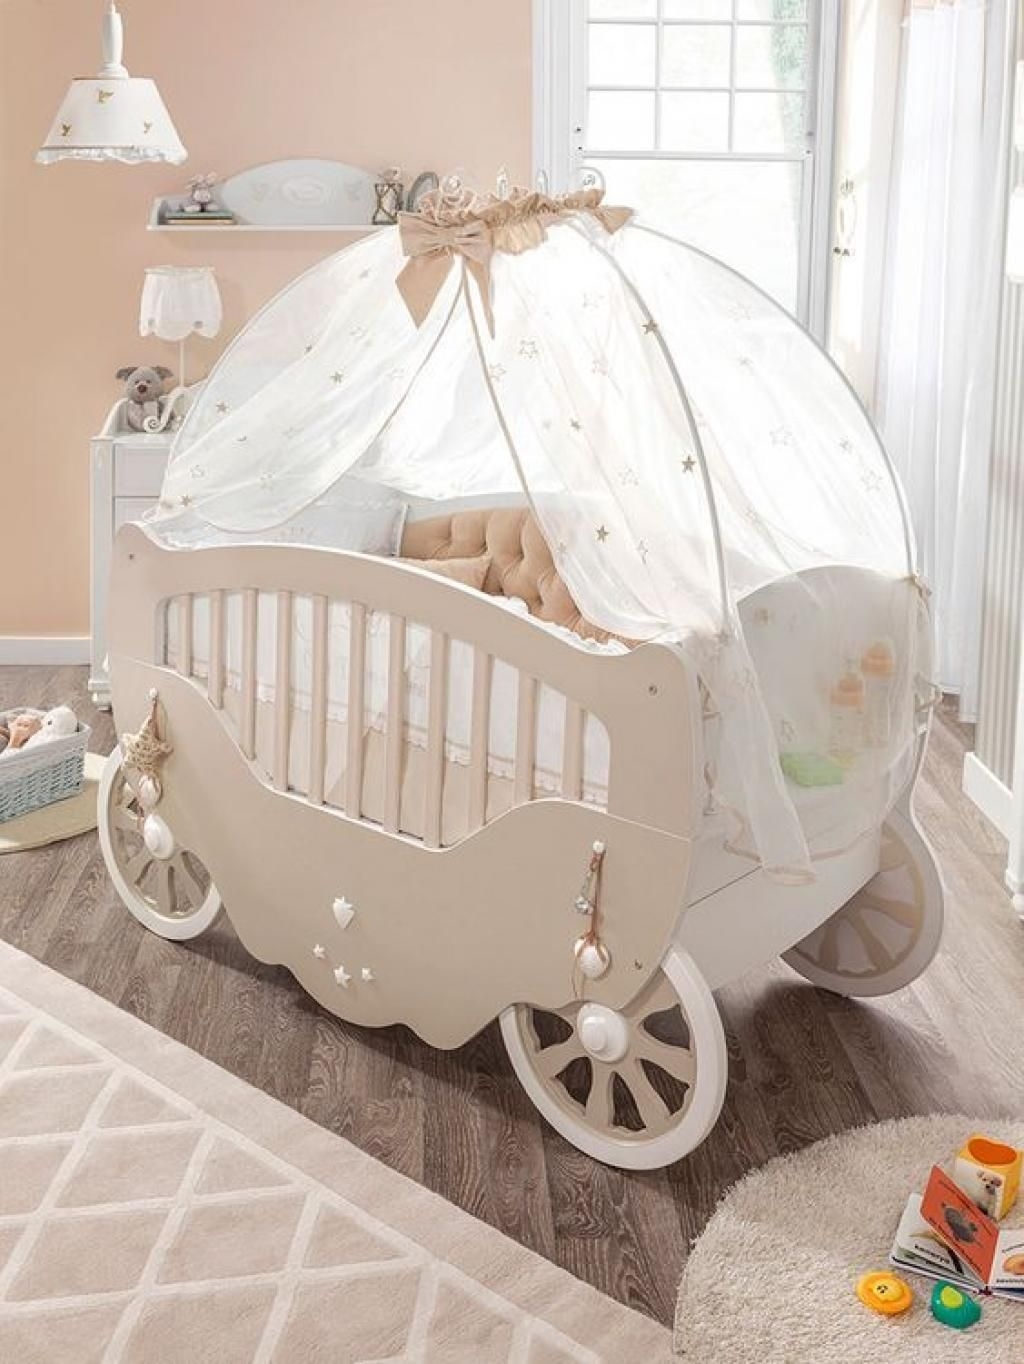 Cute baby crib bedding